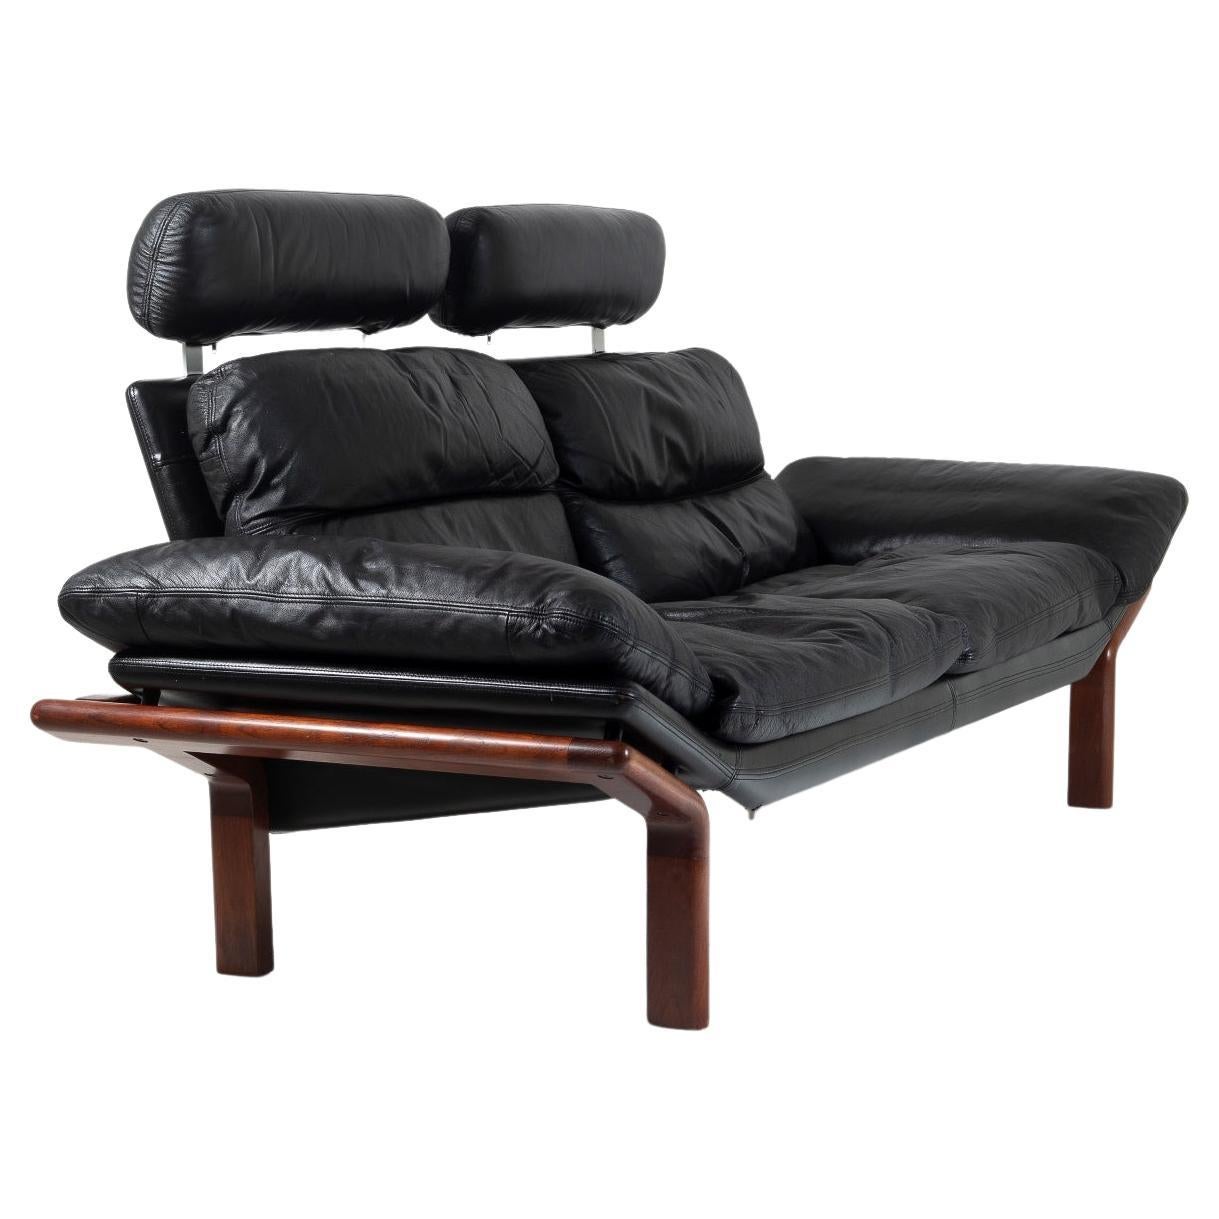 1960-70s Mid-Century Modern Danish Black Leather and Teak Sofa by Komfort